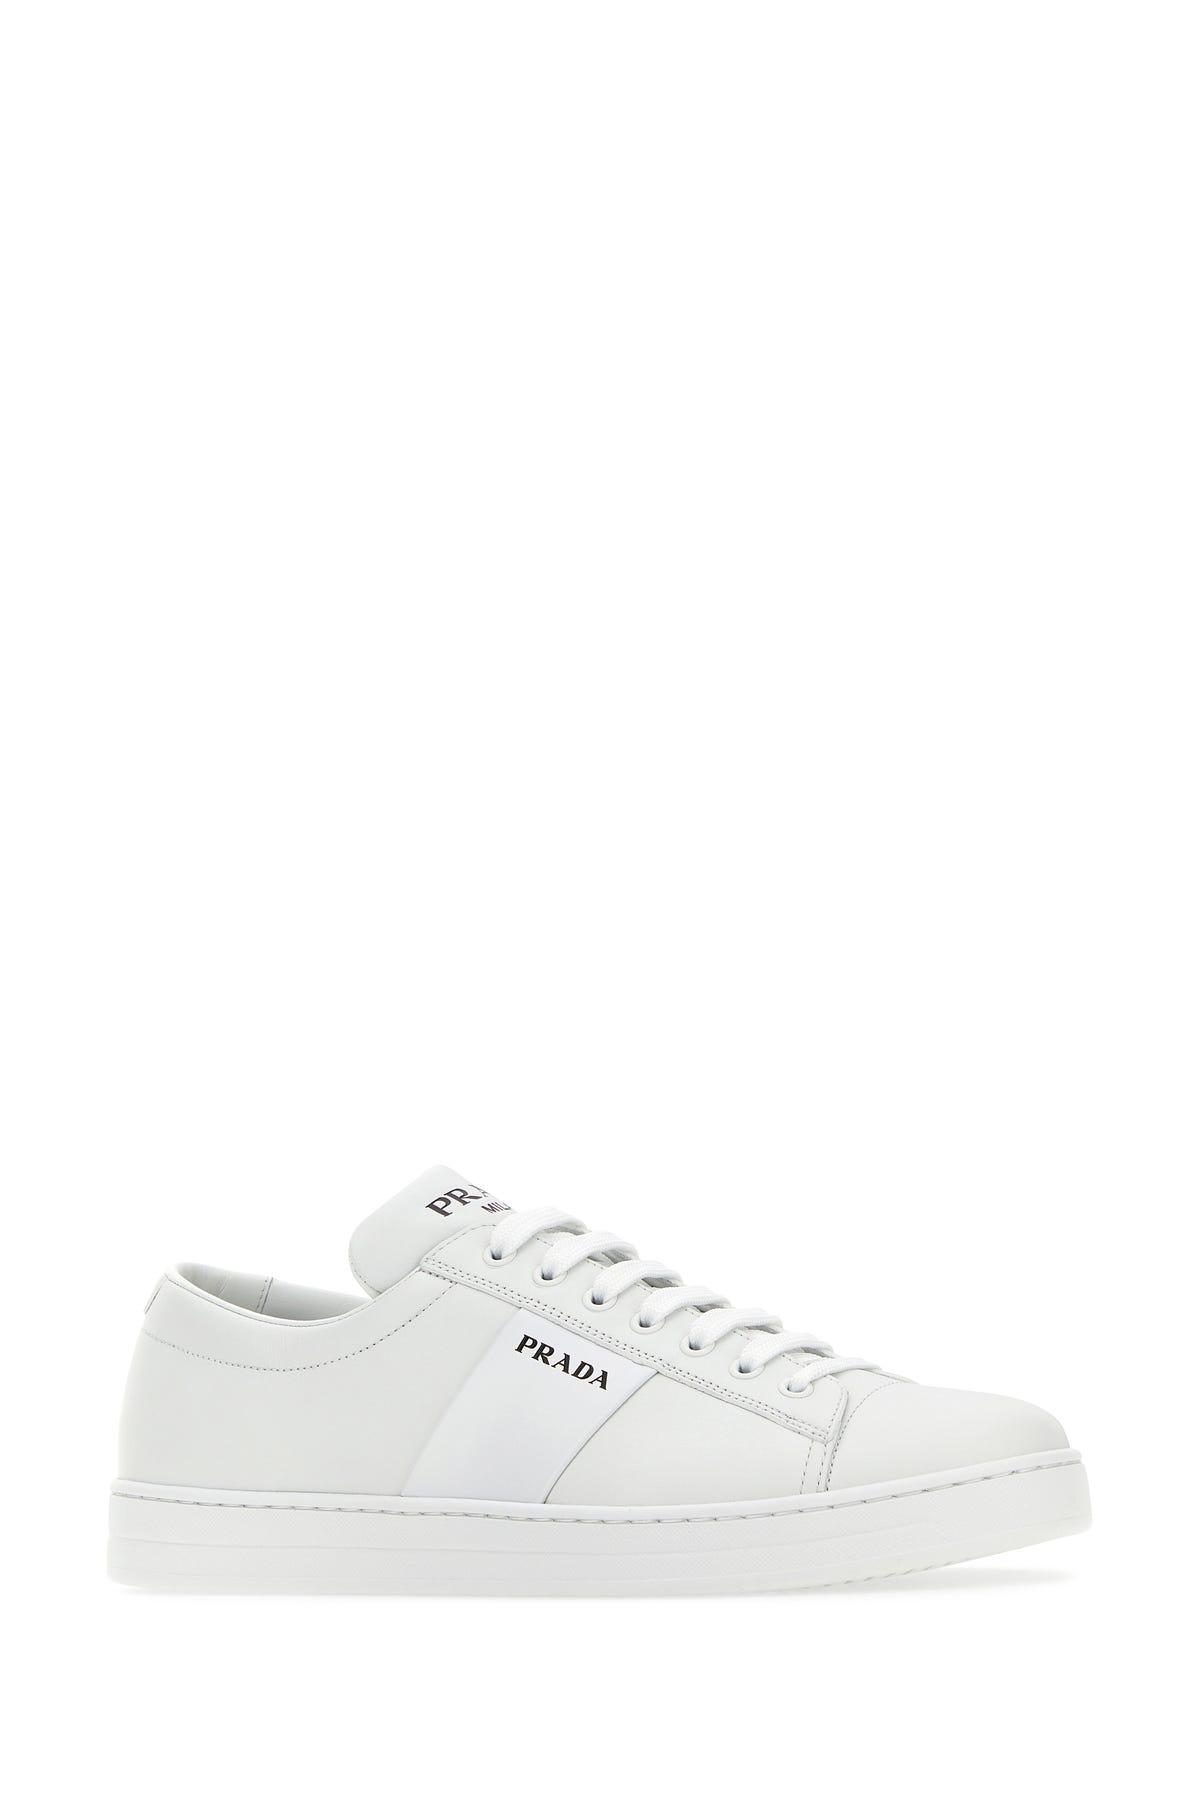 Prada Sneakers in White for Men | Lyst